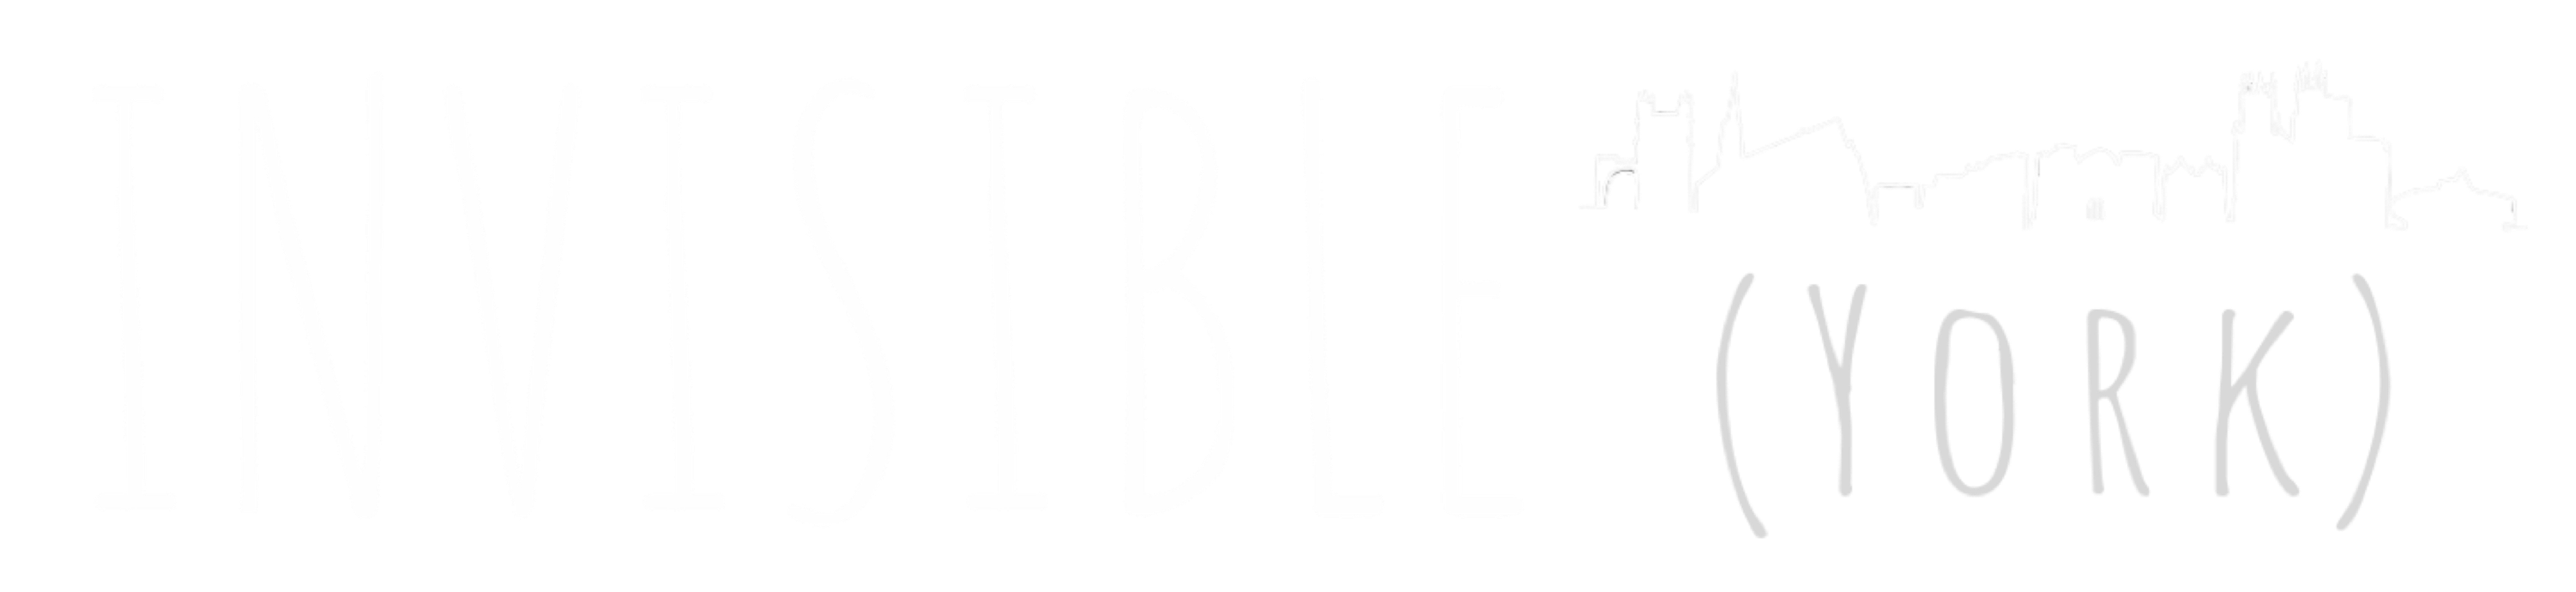 Invisible York Logo.